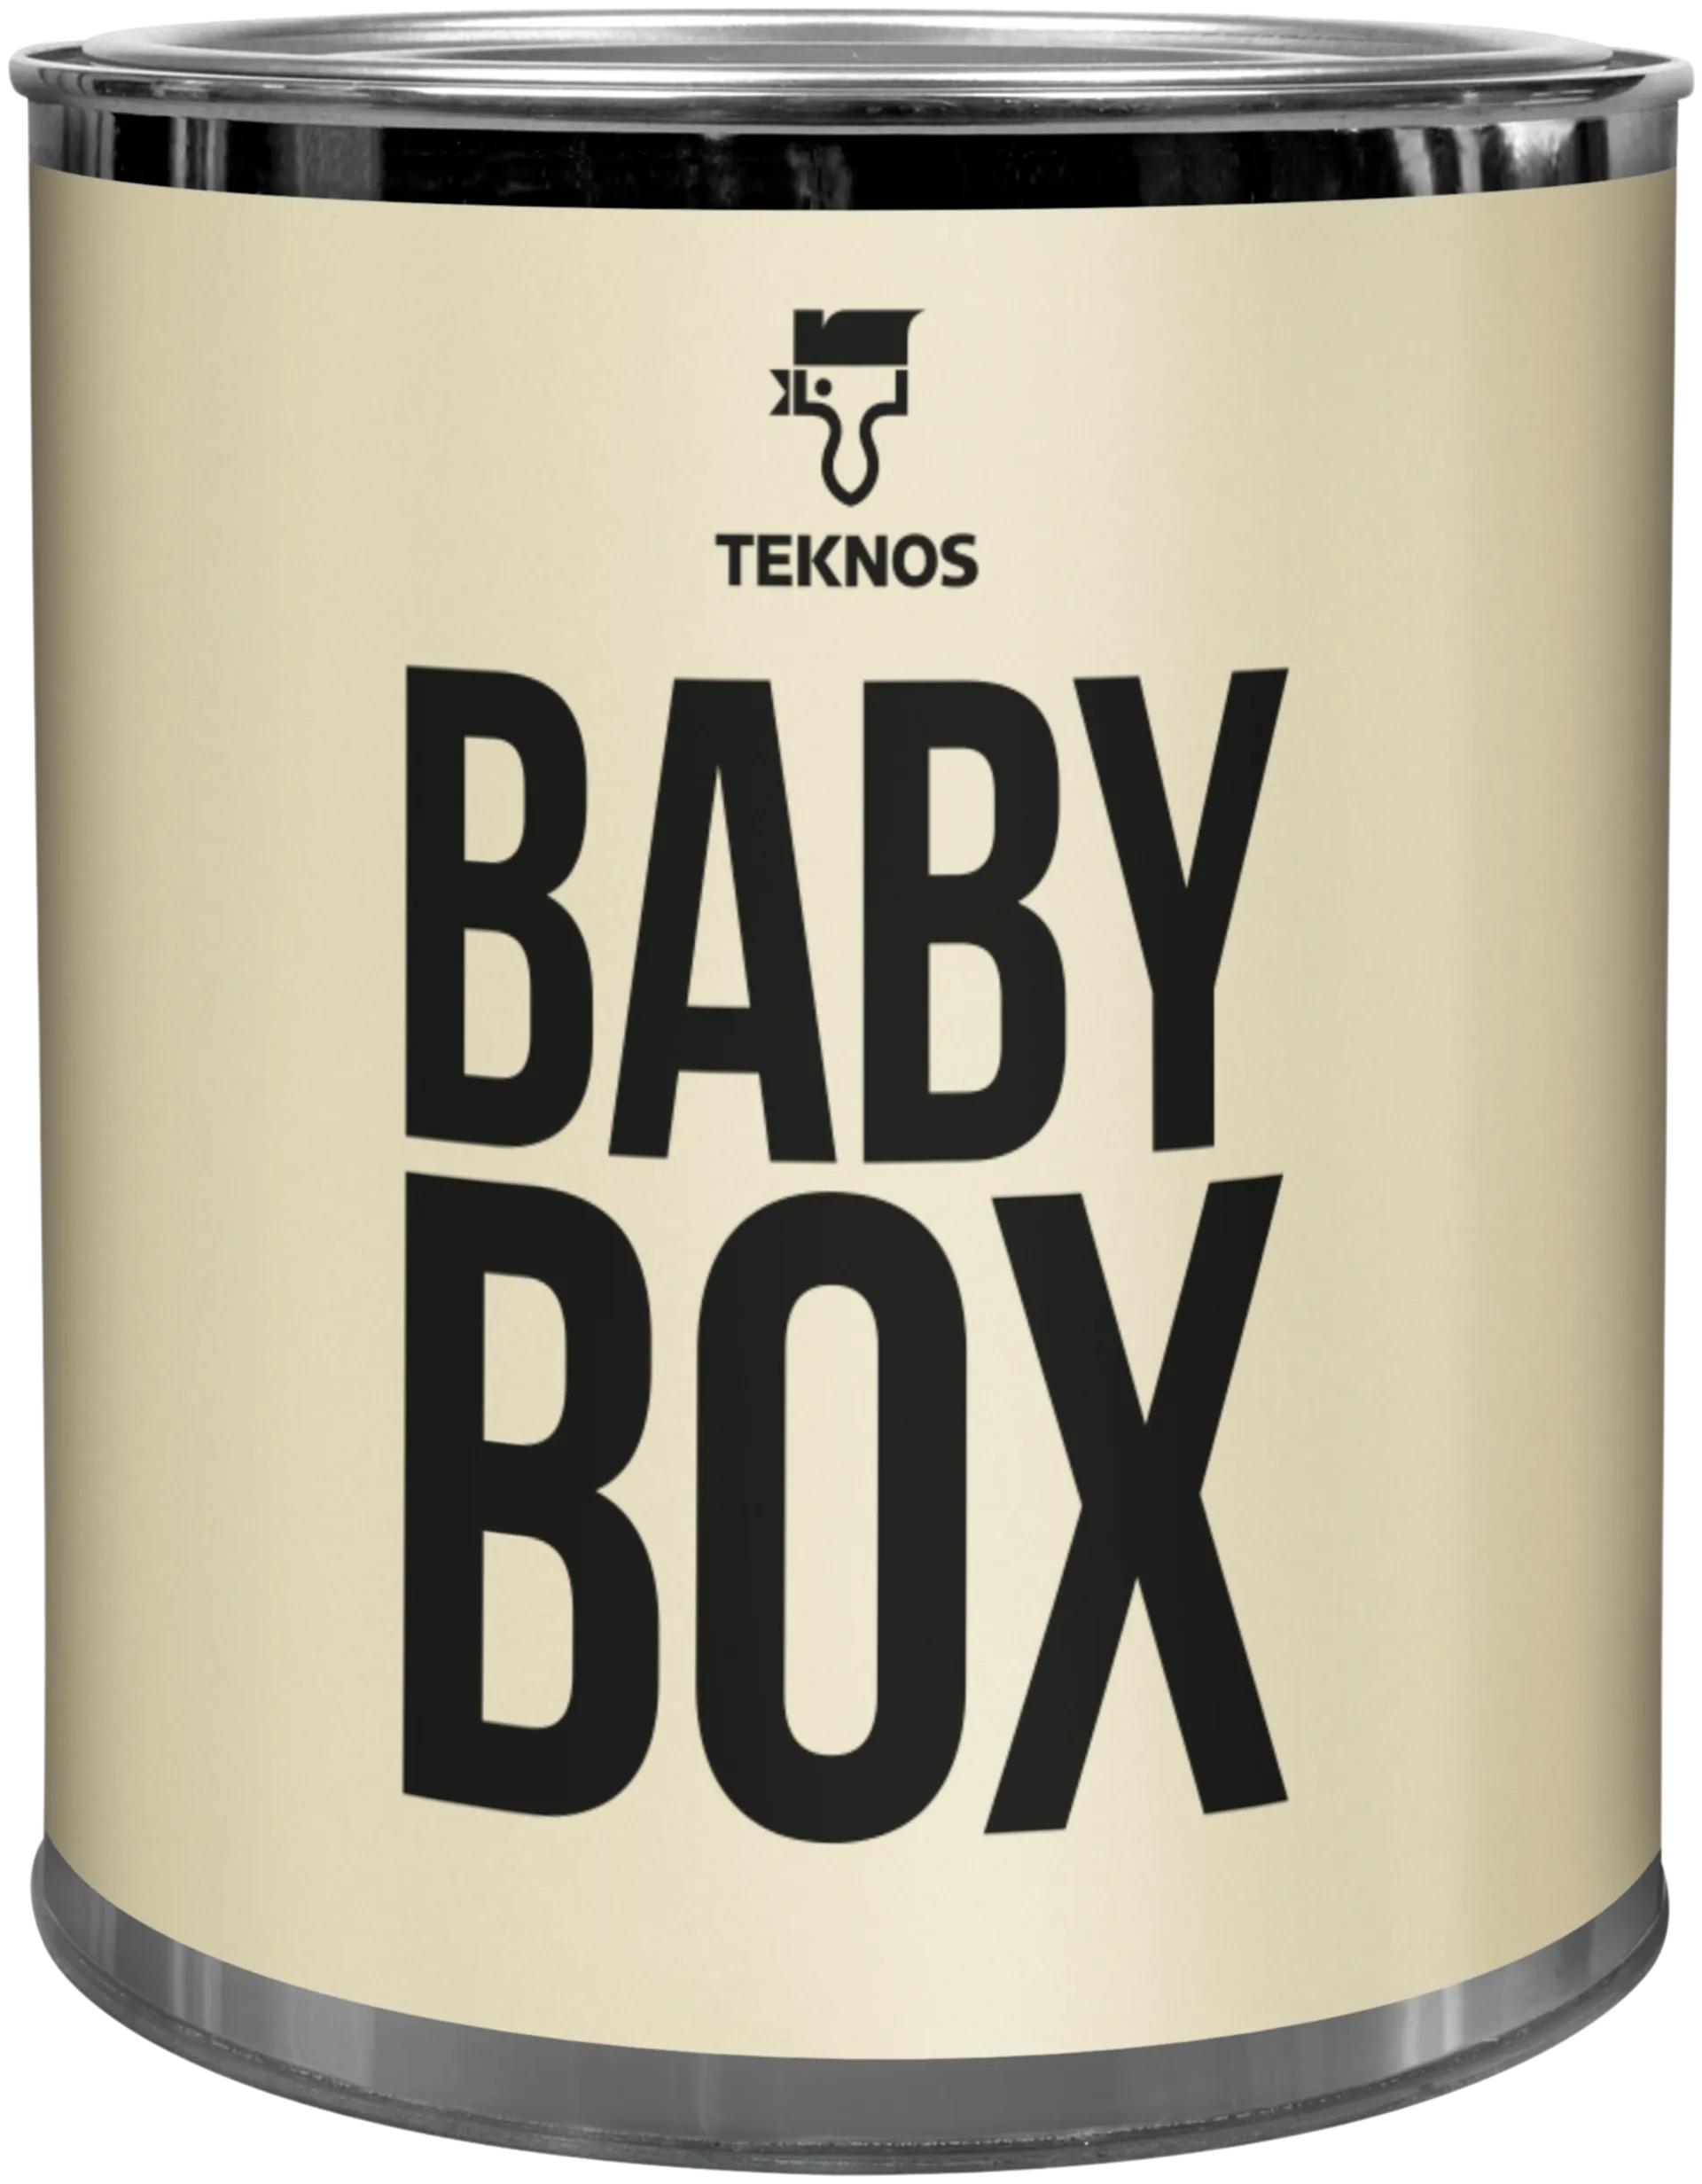 Teknos Colour sample Babybox T1608